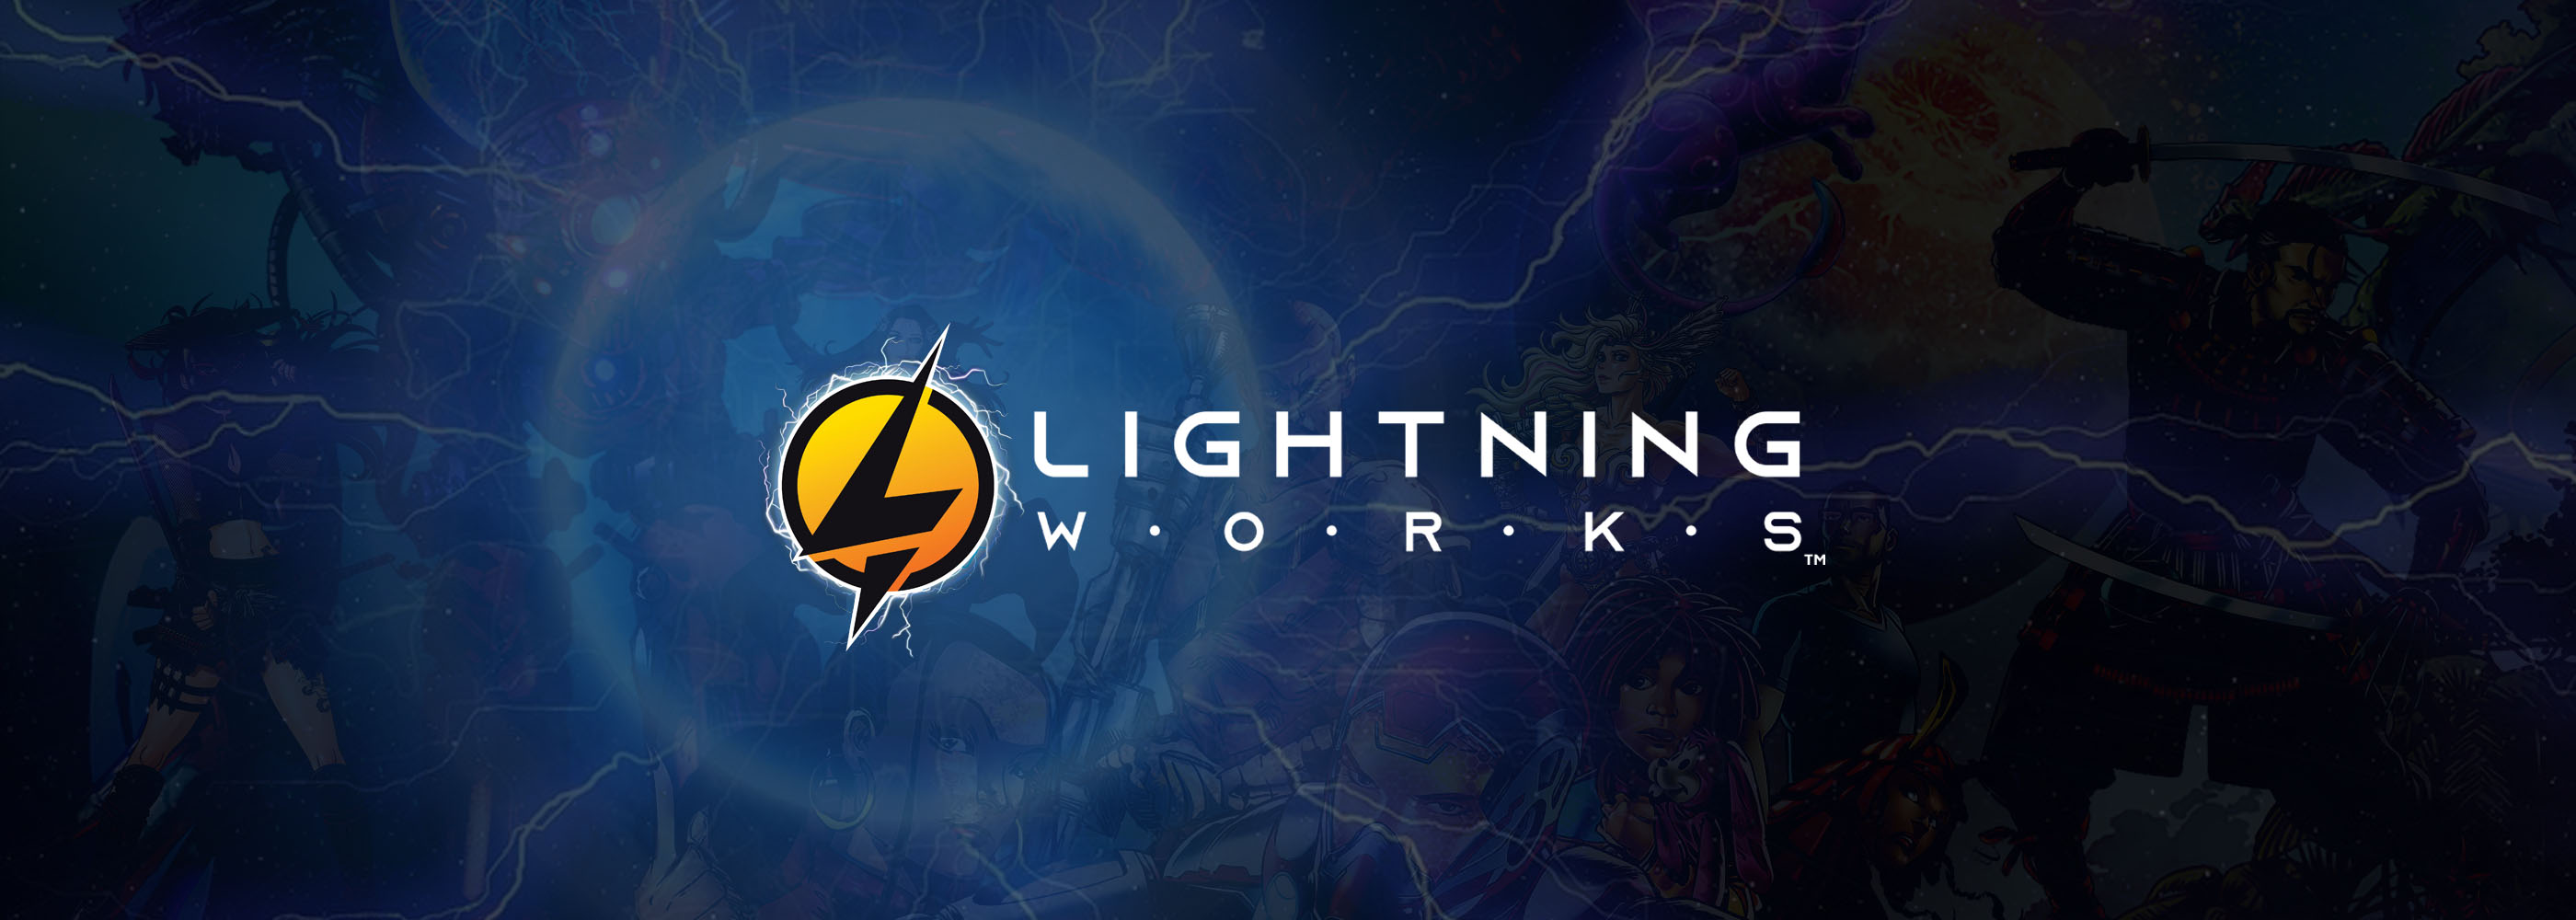 Lightningworks7 バナー